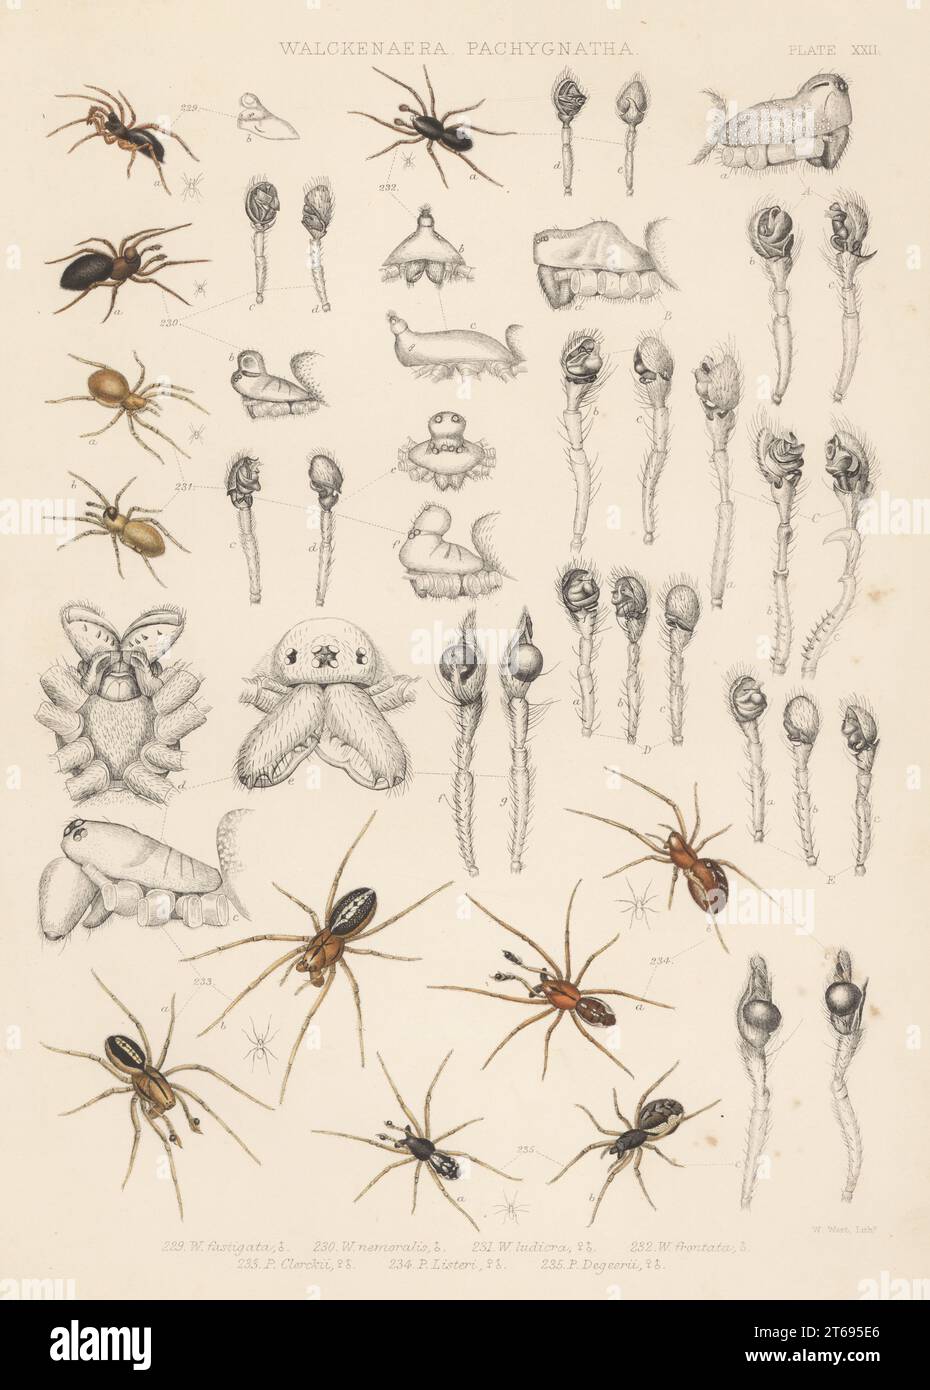 Sheet weaver spider, Trichopterna thorelli 229, dwarf spider, Pelecopsis nemoralis 230, Peponocranium ludicrum 231, Savignia frontata 232, long-jawed orbweavers, Pachygnatha clercki 233, Pachygnatha listeri 234, Pachygnatha degeeri 235, Lophomma punctatum A, Oedothorax gibbosus B, Erigone atra C, Neriene agrestis D, and Oedothorax fuscus E. Handcoloured lithograph by W. West from John Blackwalls A History of the Spiders of Great Britain and Ireland, Ray Society, London, 1861. Stock Photo